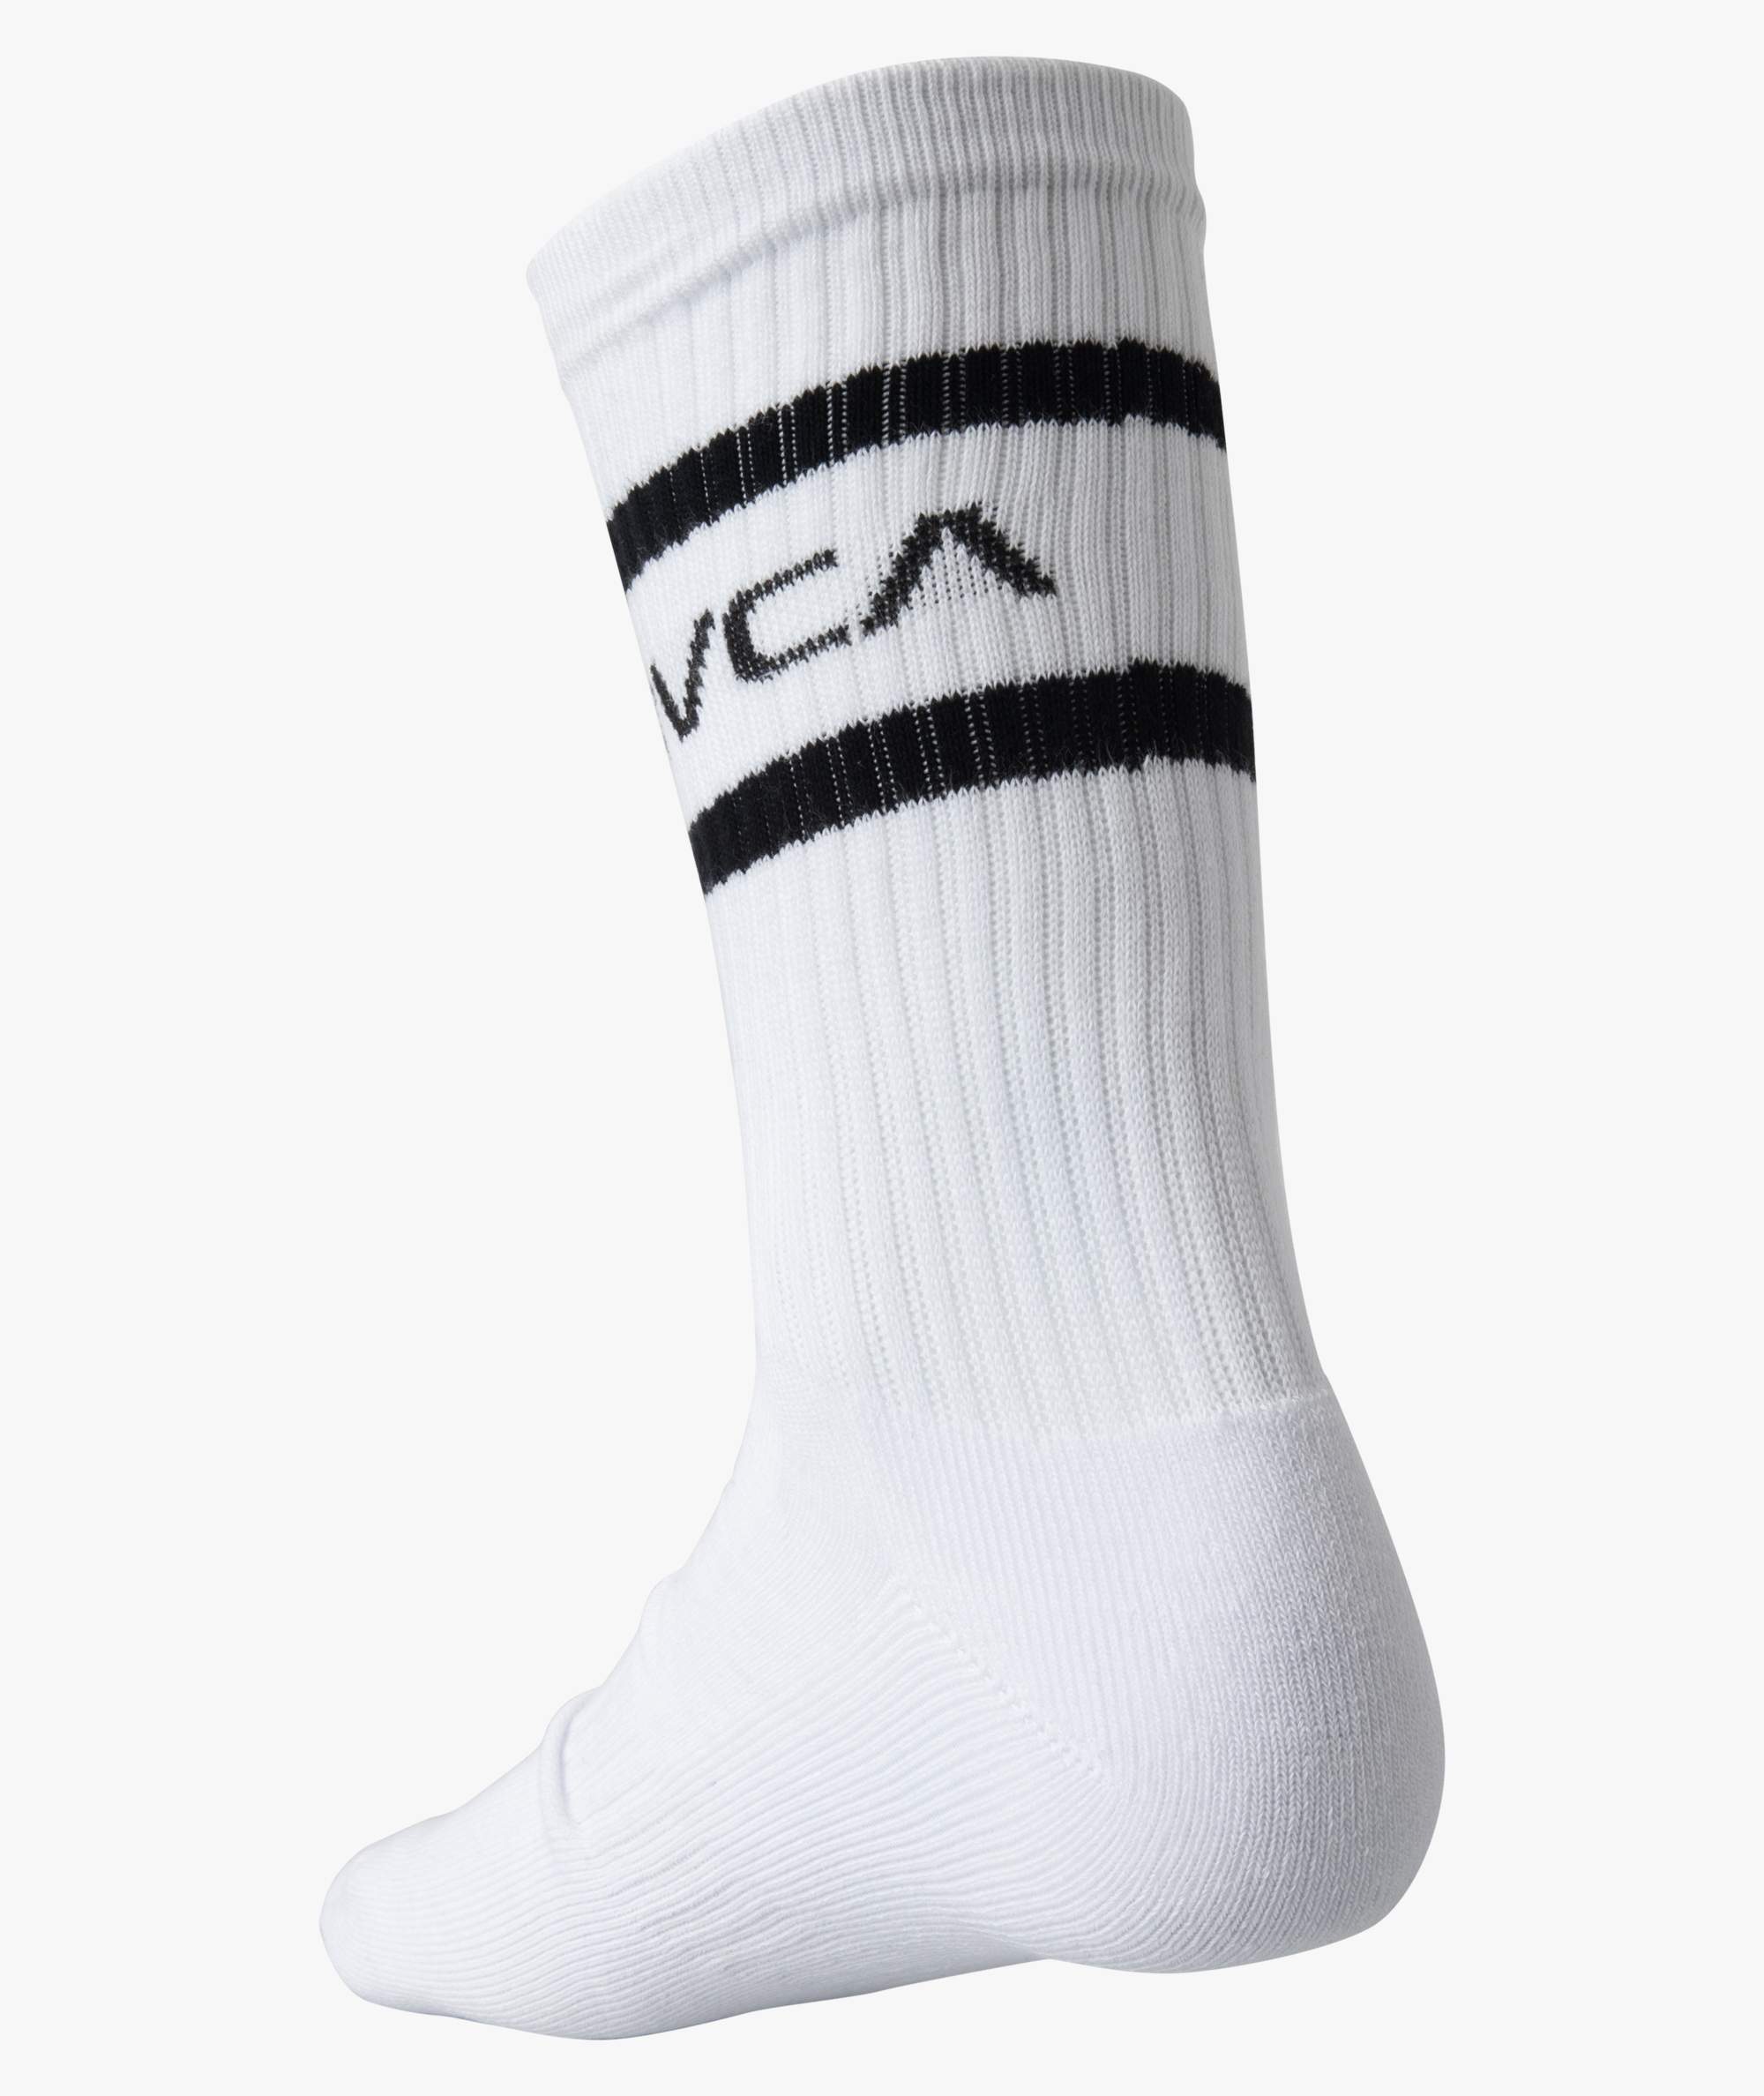 RVCA 2 Pack Striped Crew Socks White